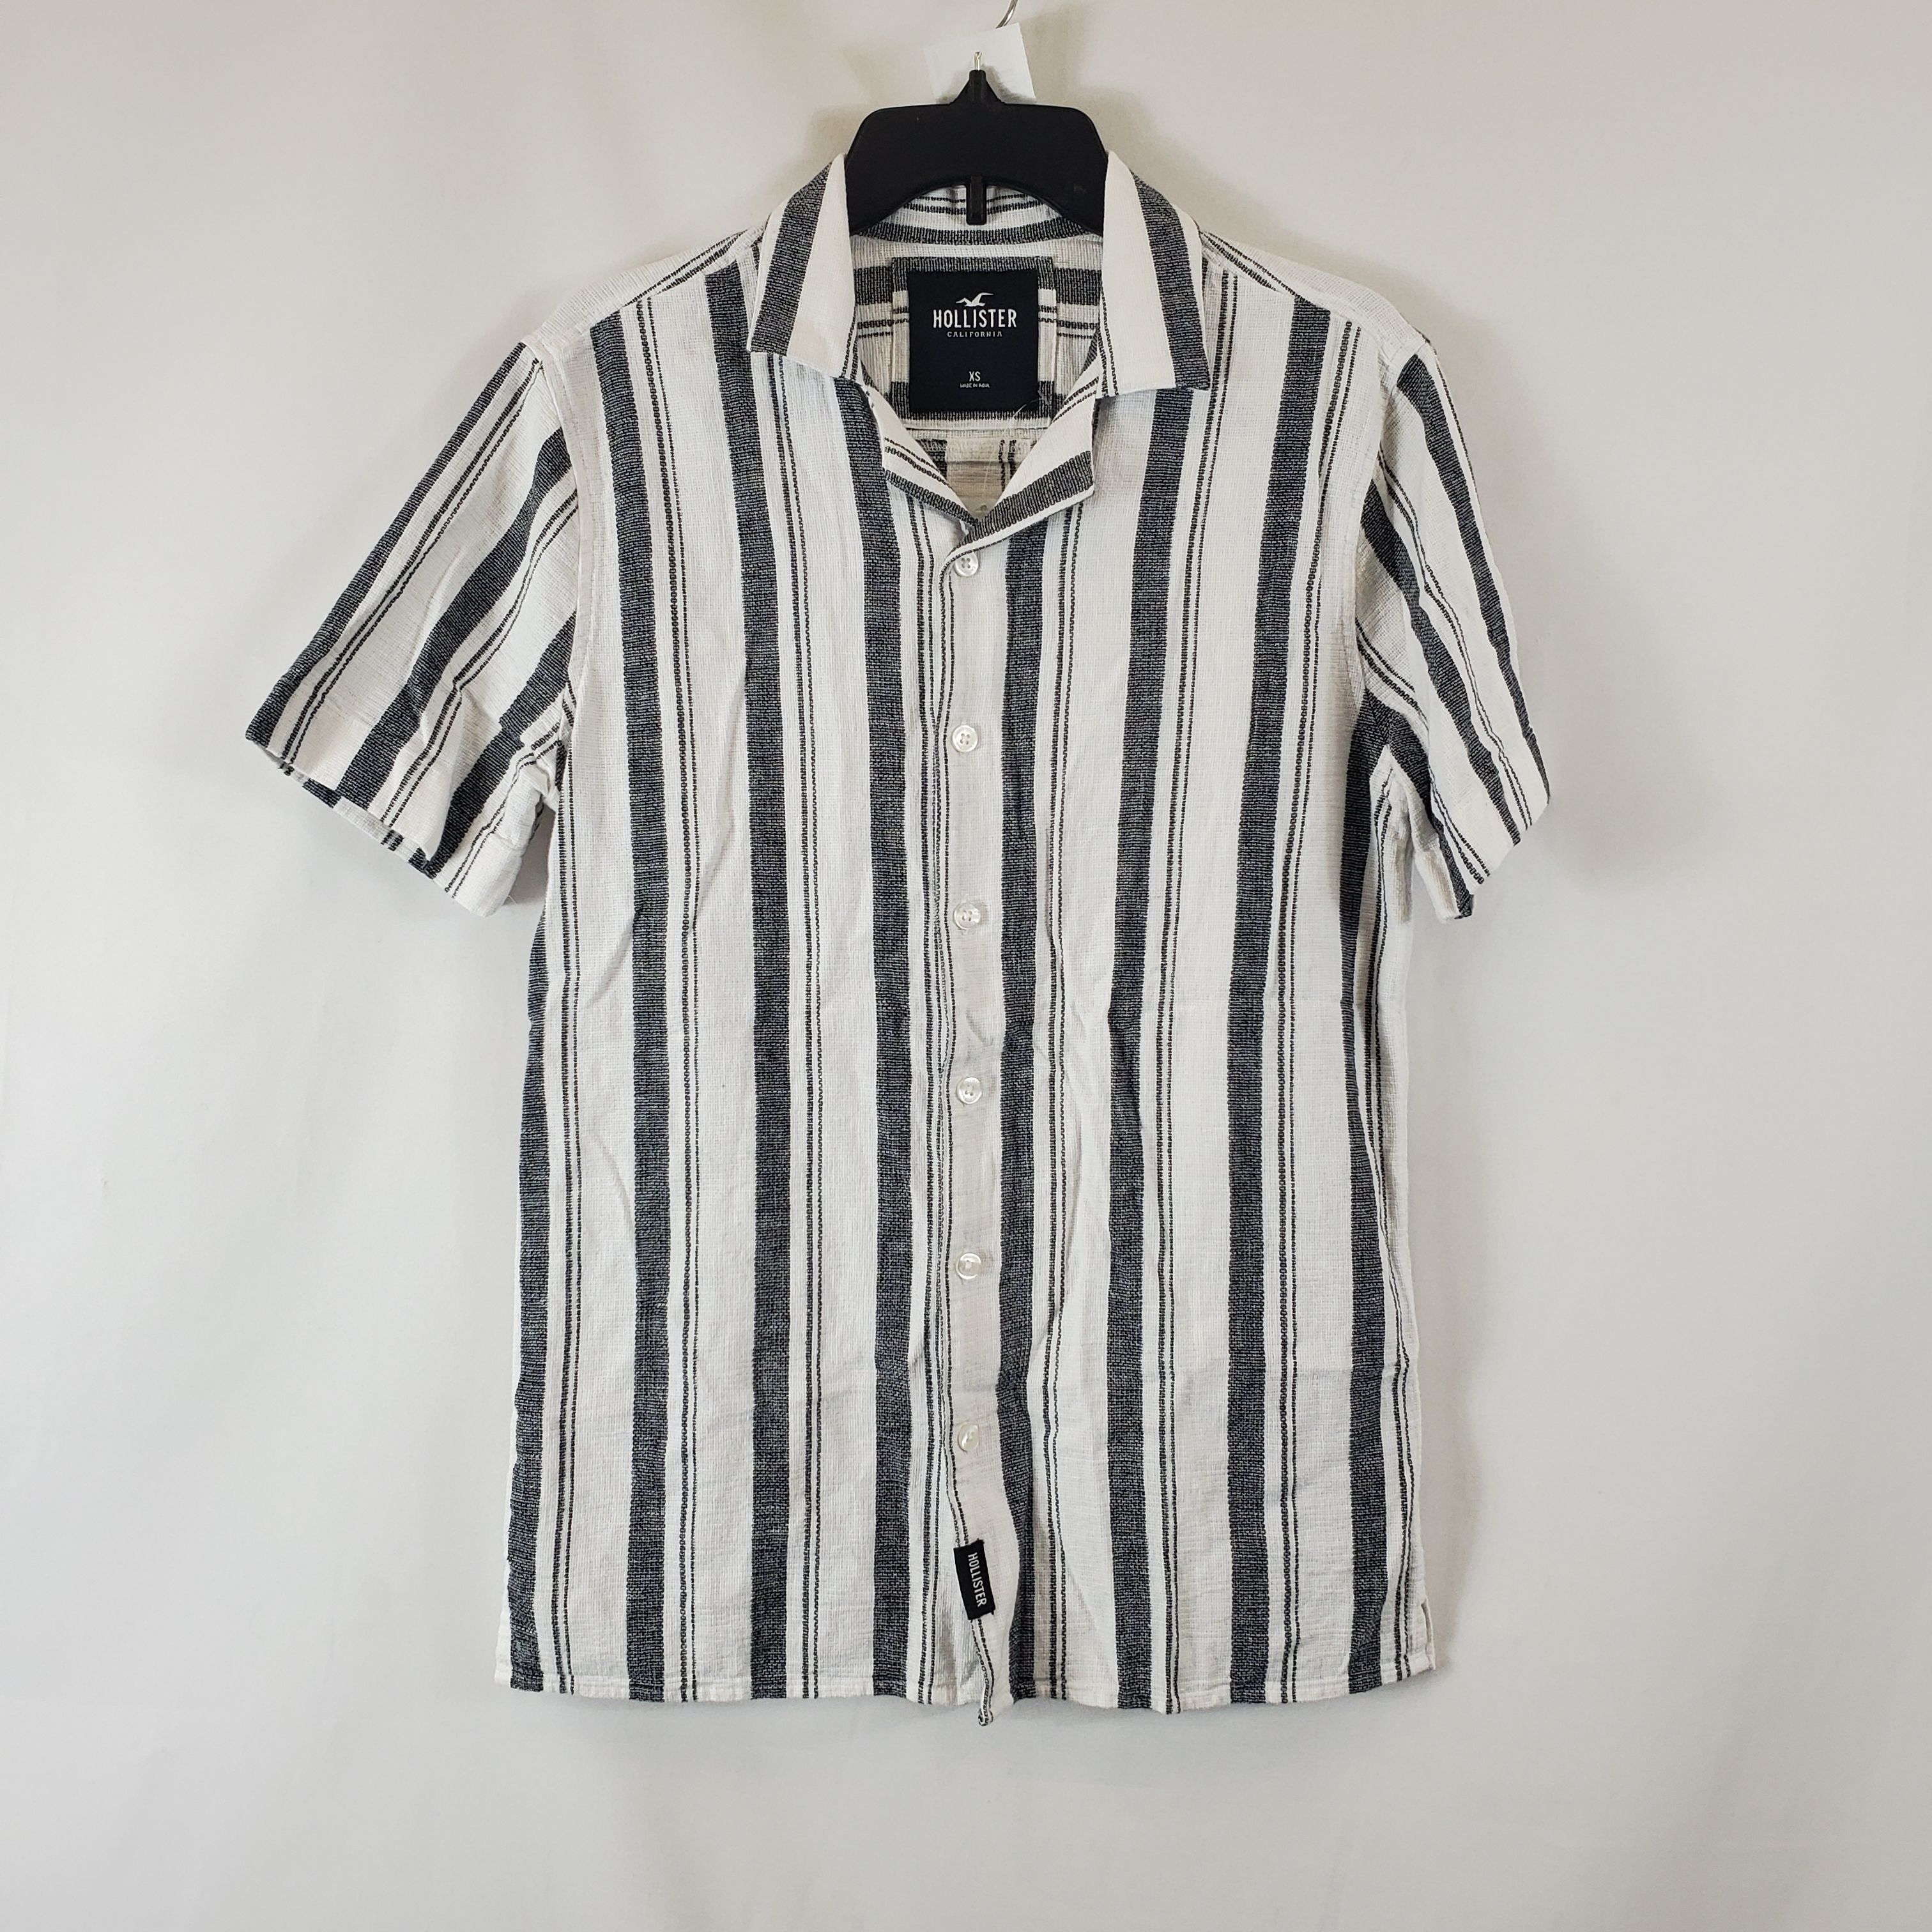 Buy the Hollister Men's White/Gray Striped Button Up Shirt SZ XS